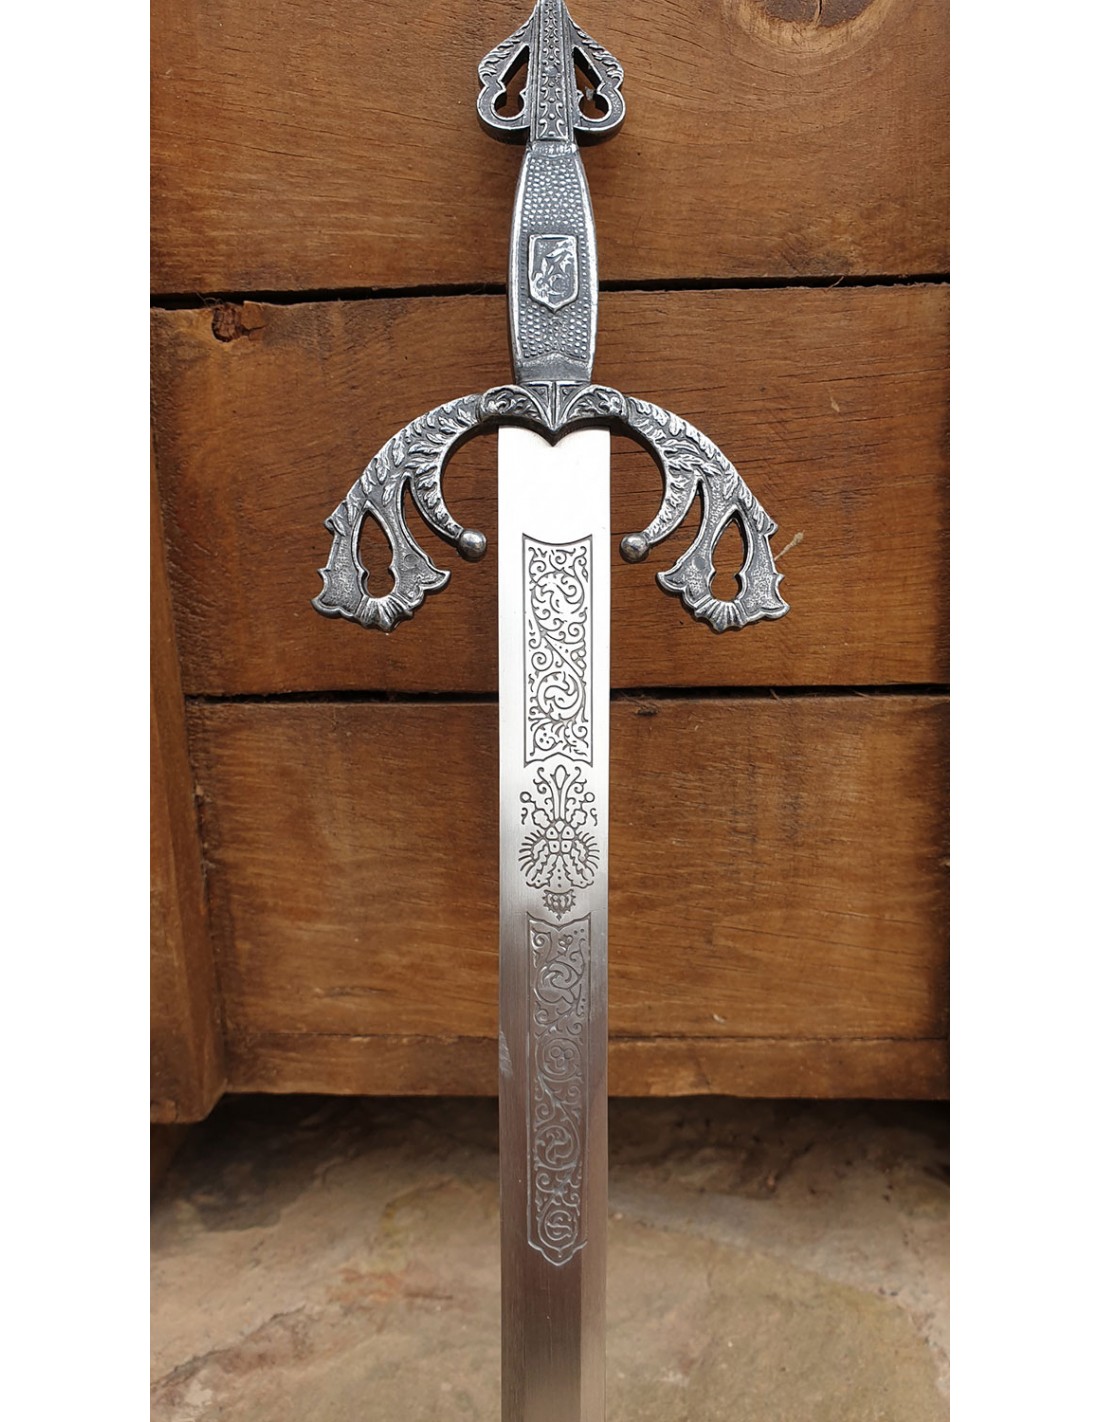 Tizona Cid Sword 56 Cm